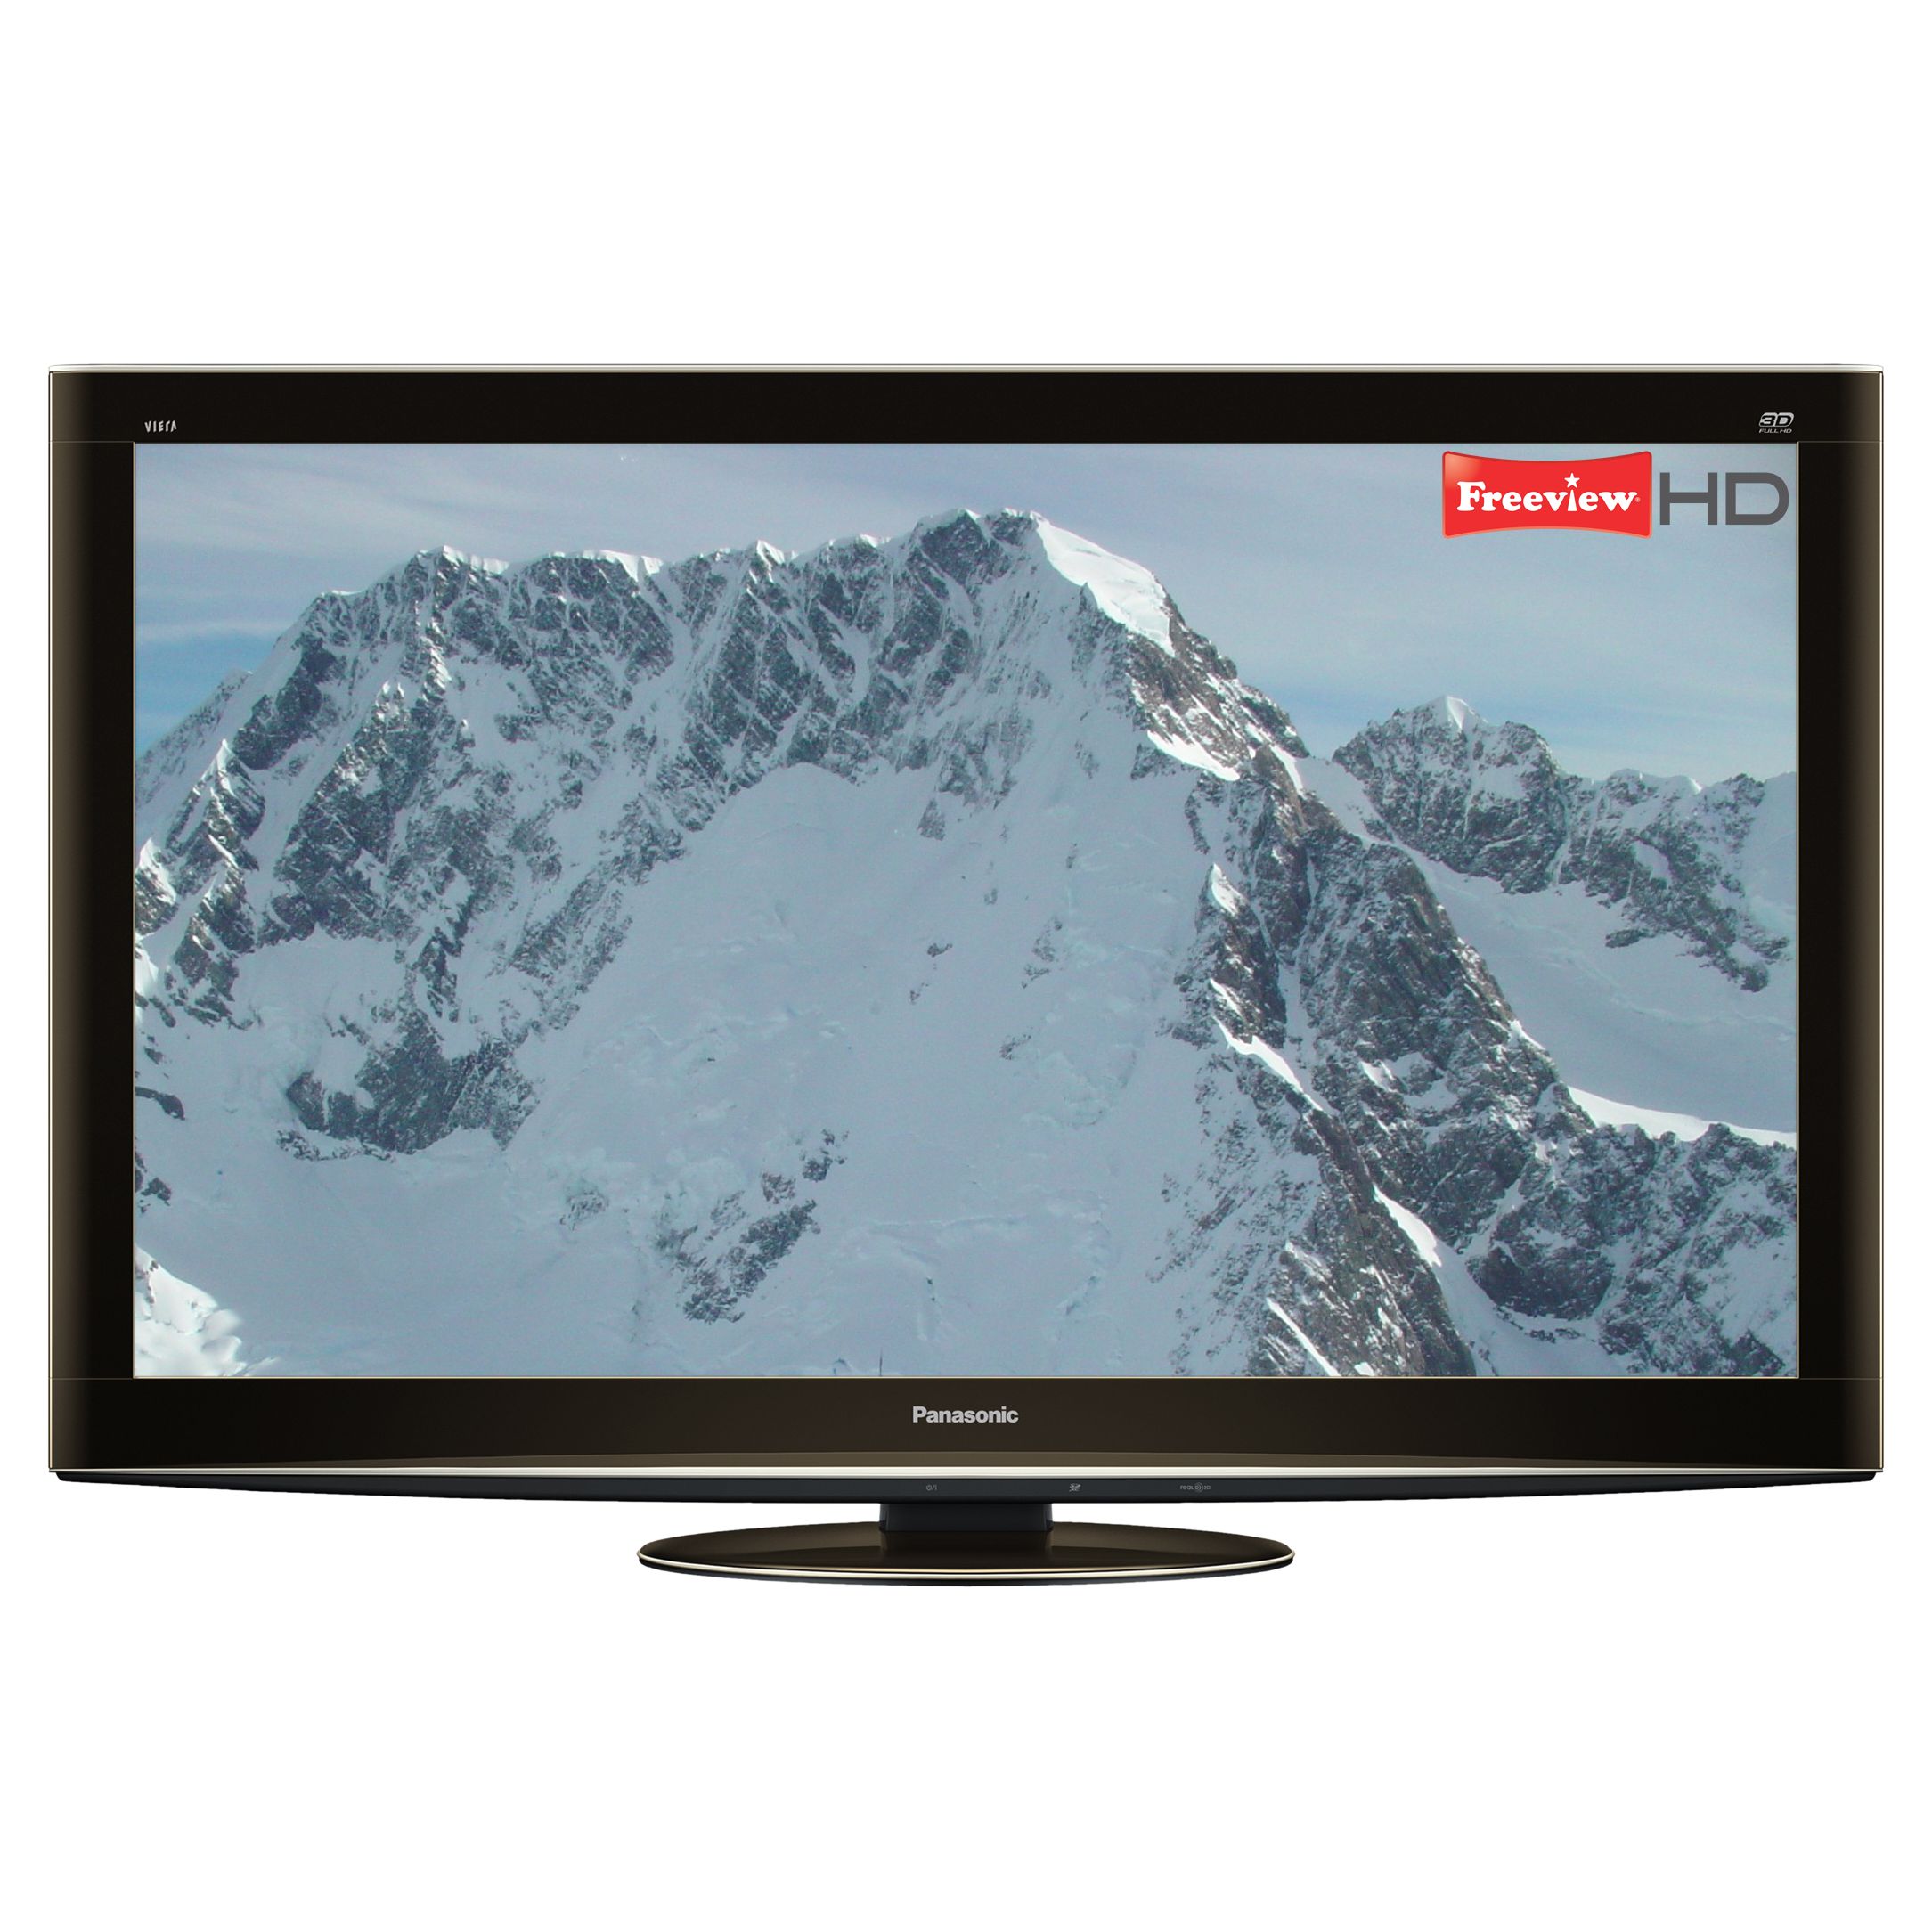 Panasonic Viera TX-P46VT20 Plasma HD 1080p 3D TV, 46" with Built-in freesat & Freeview HD at John Lewis